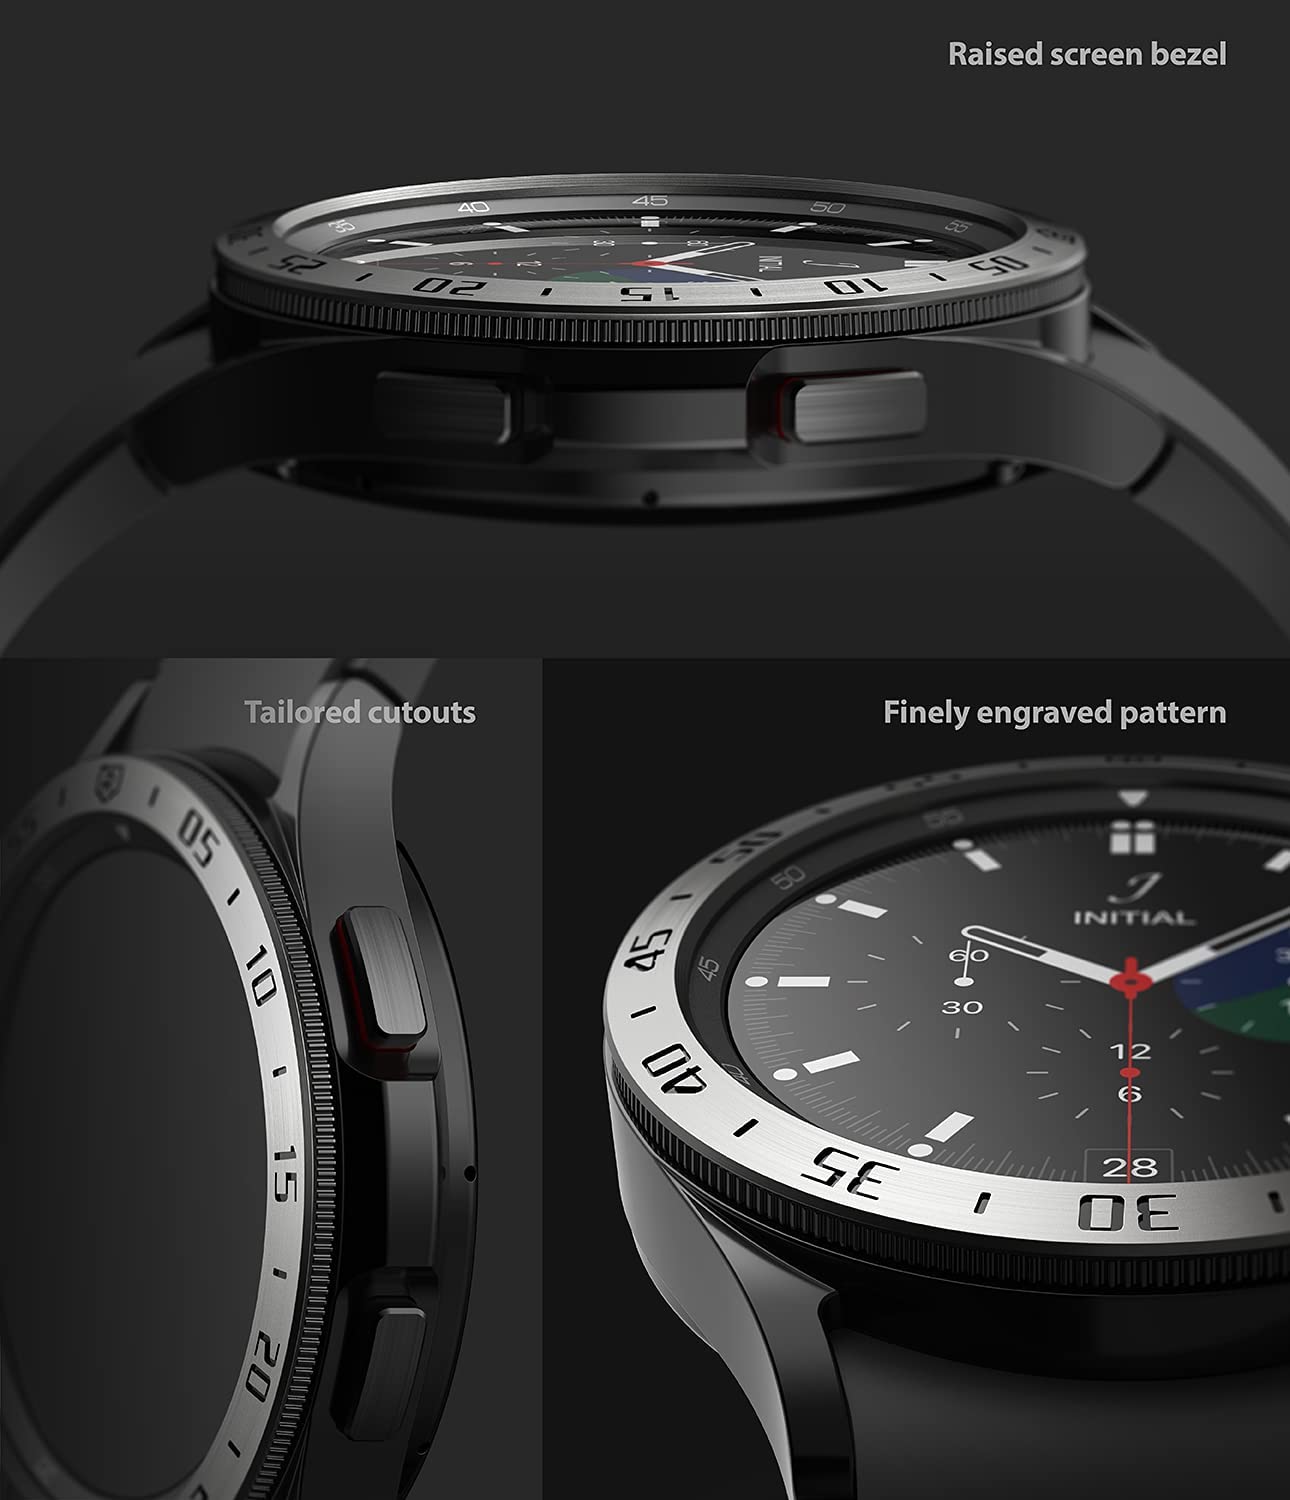 Bezel Styling Samsung Galaxy Watch 4 Classic 46mm Zilver